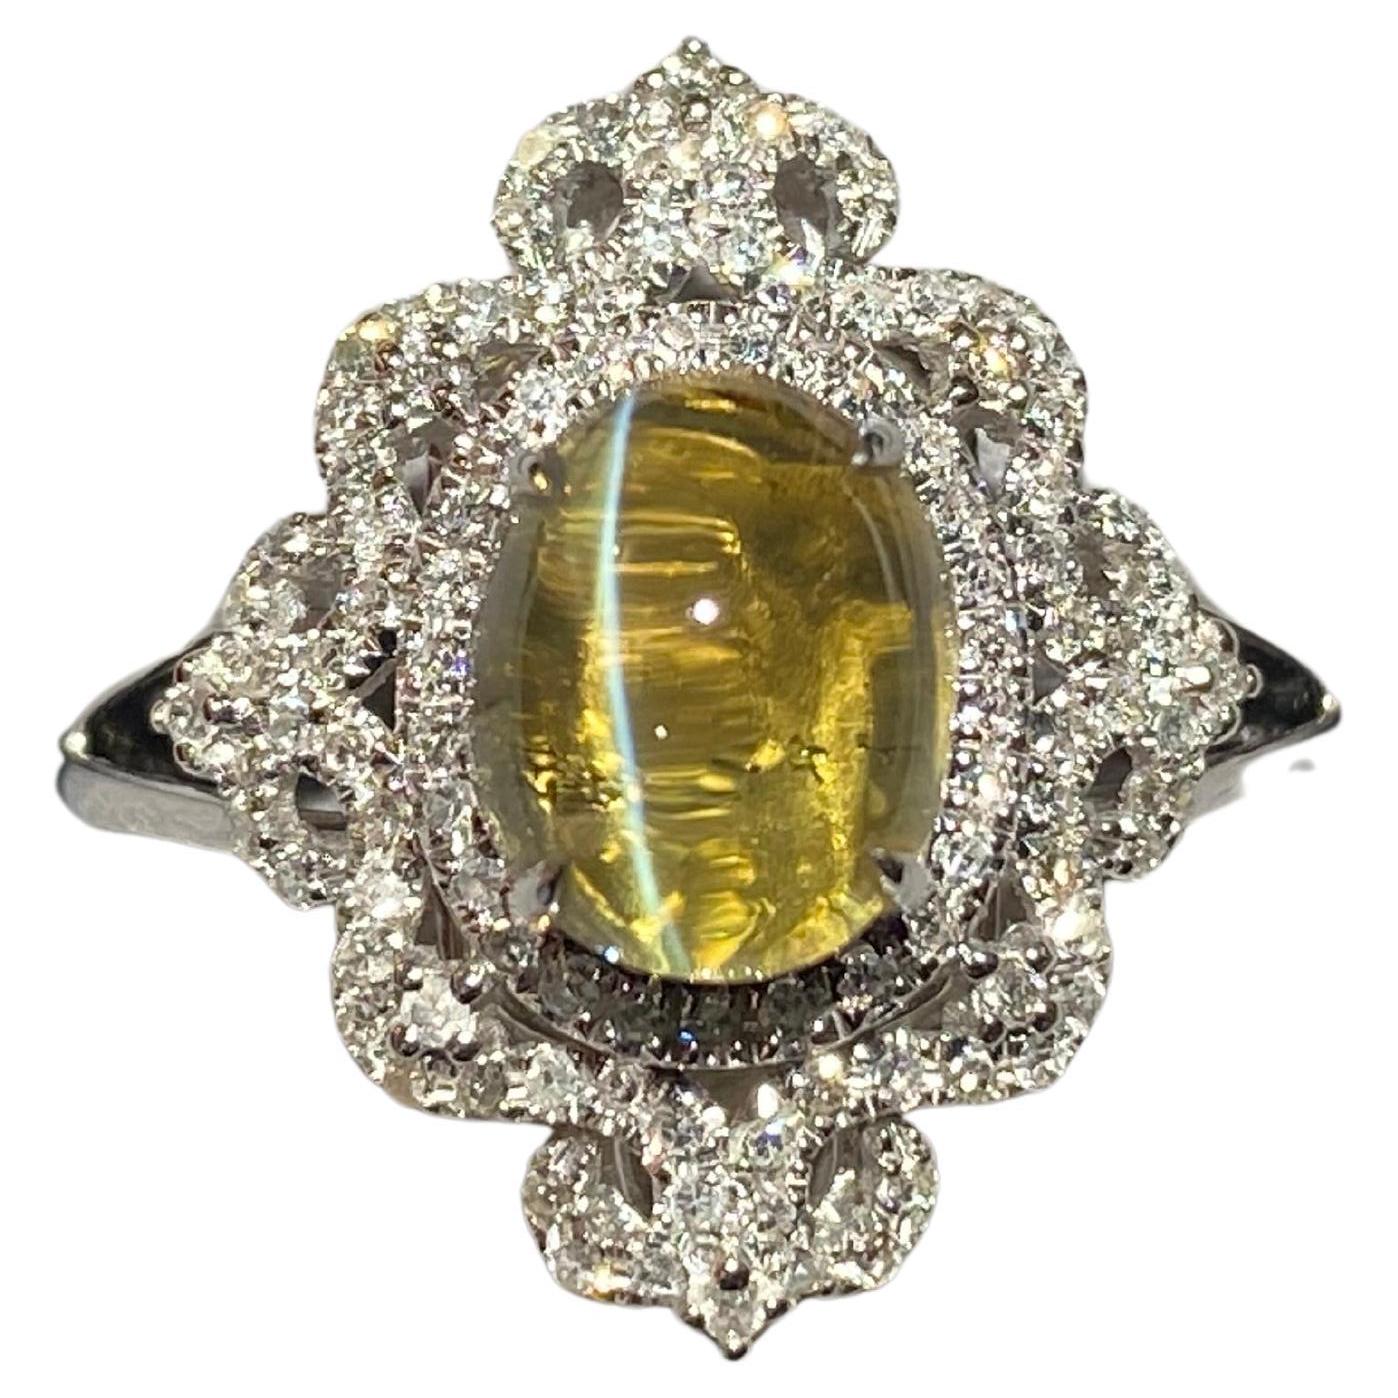 Chrysoberyl Cat's Eye and Diamond Ring in 18k White Gold